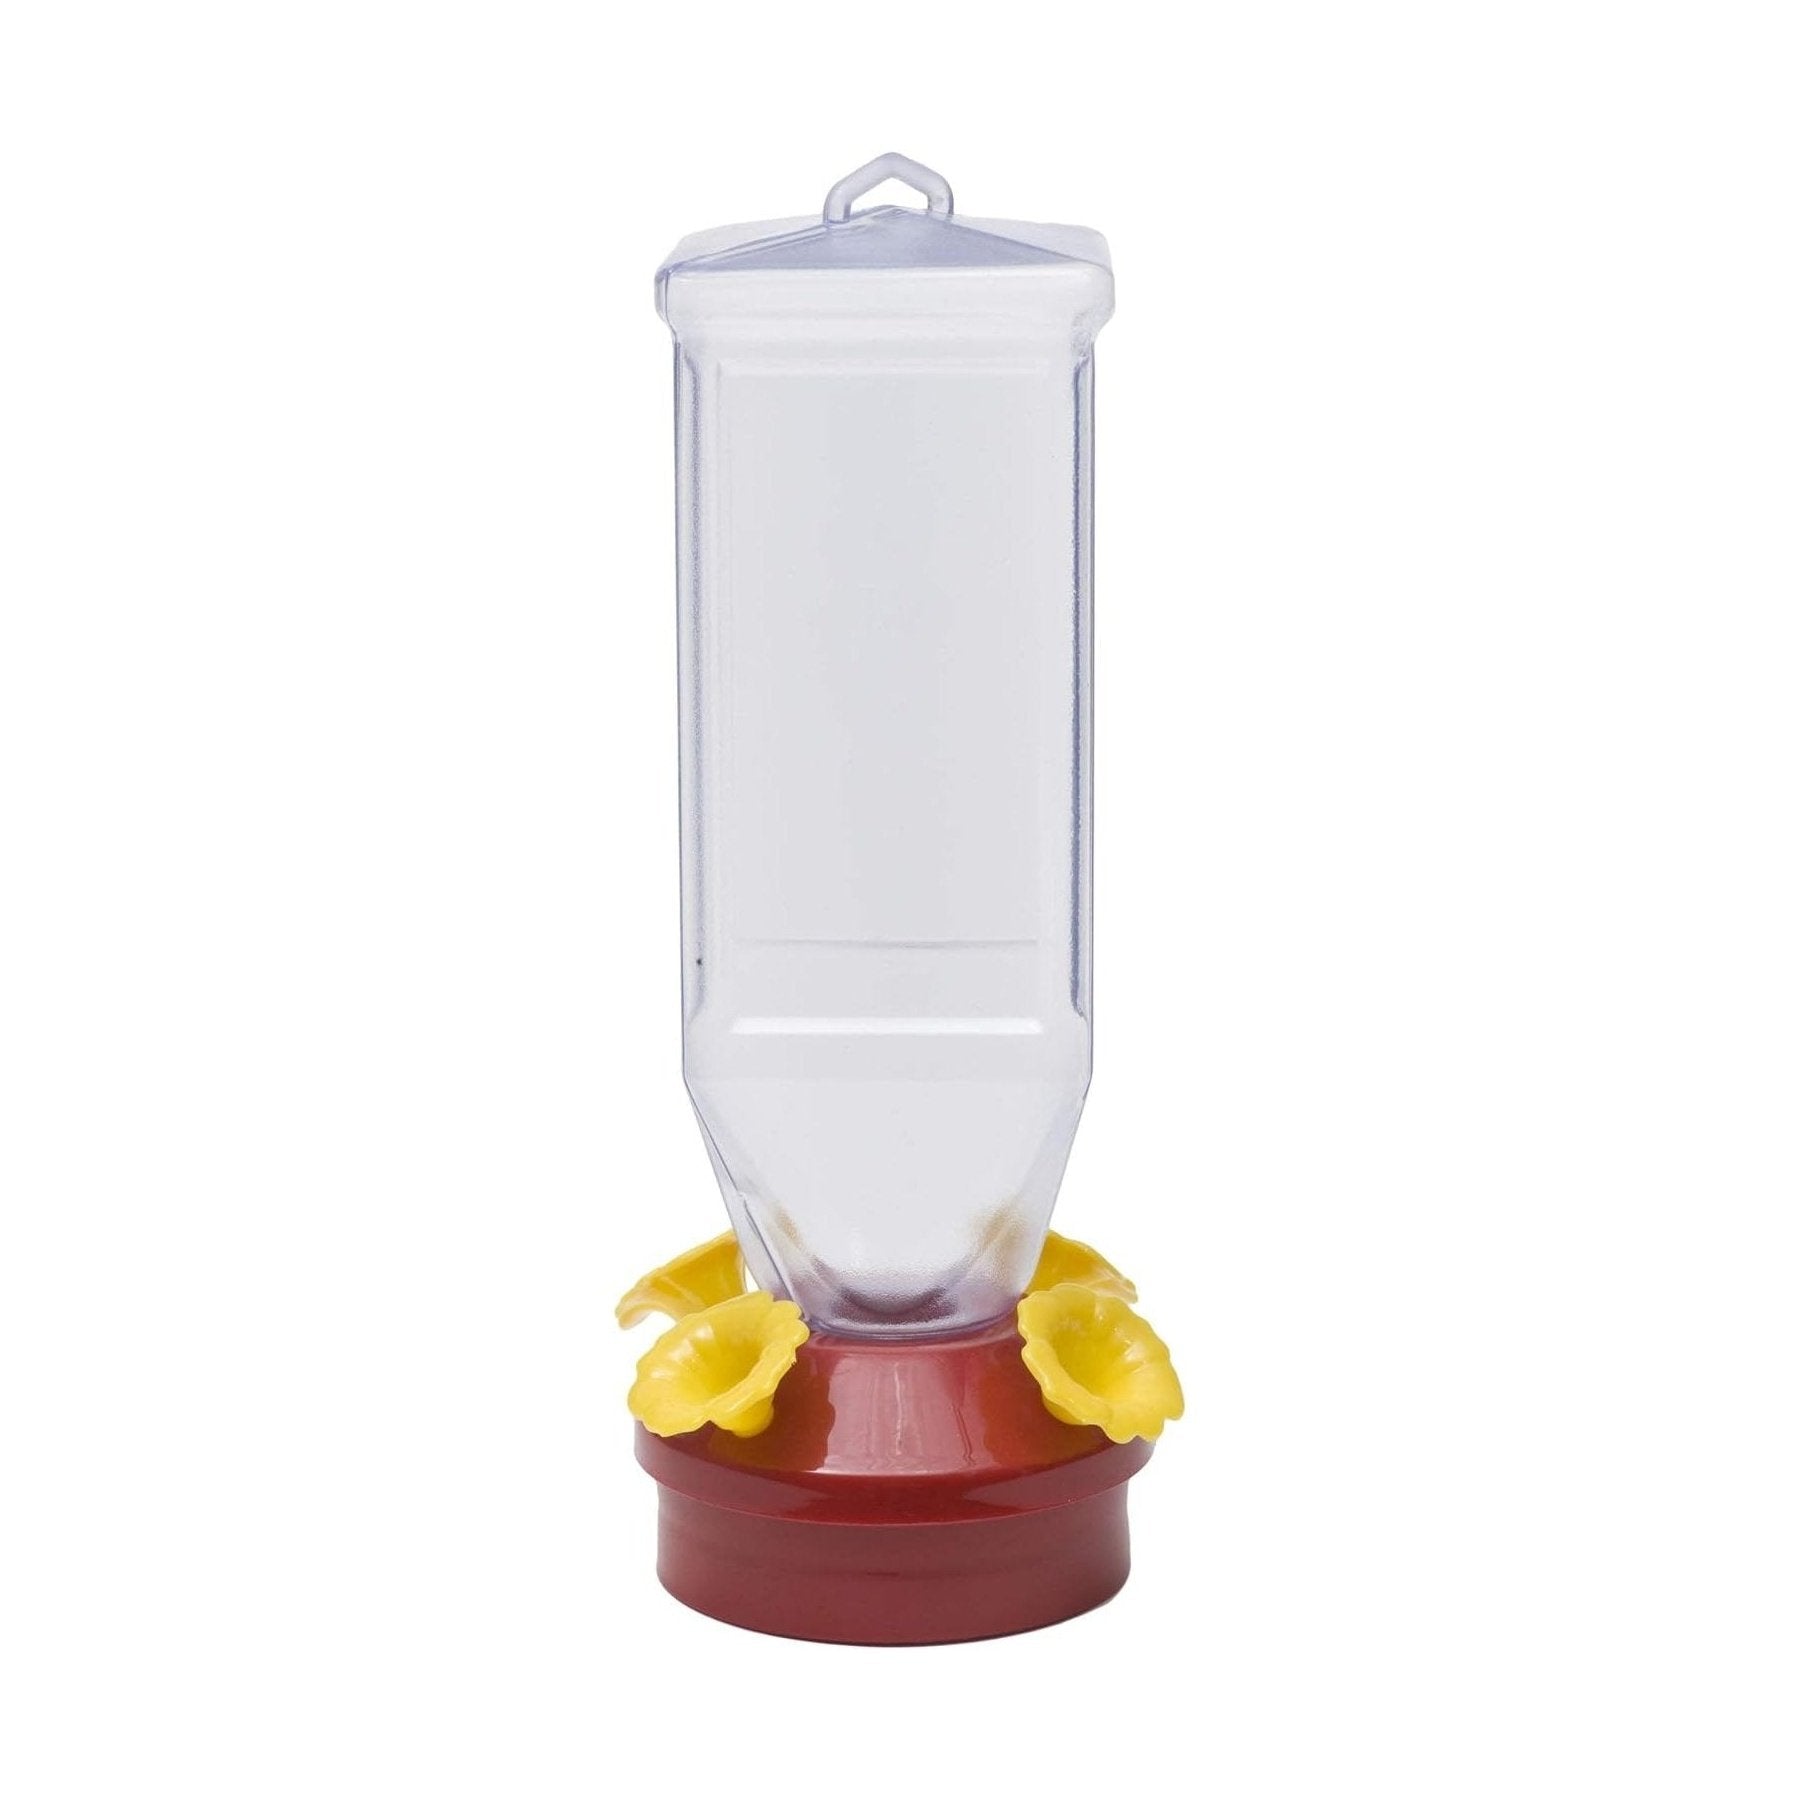 Perky-Pet 201 Lantern Design Hummingbird Feeder